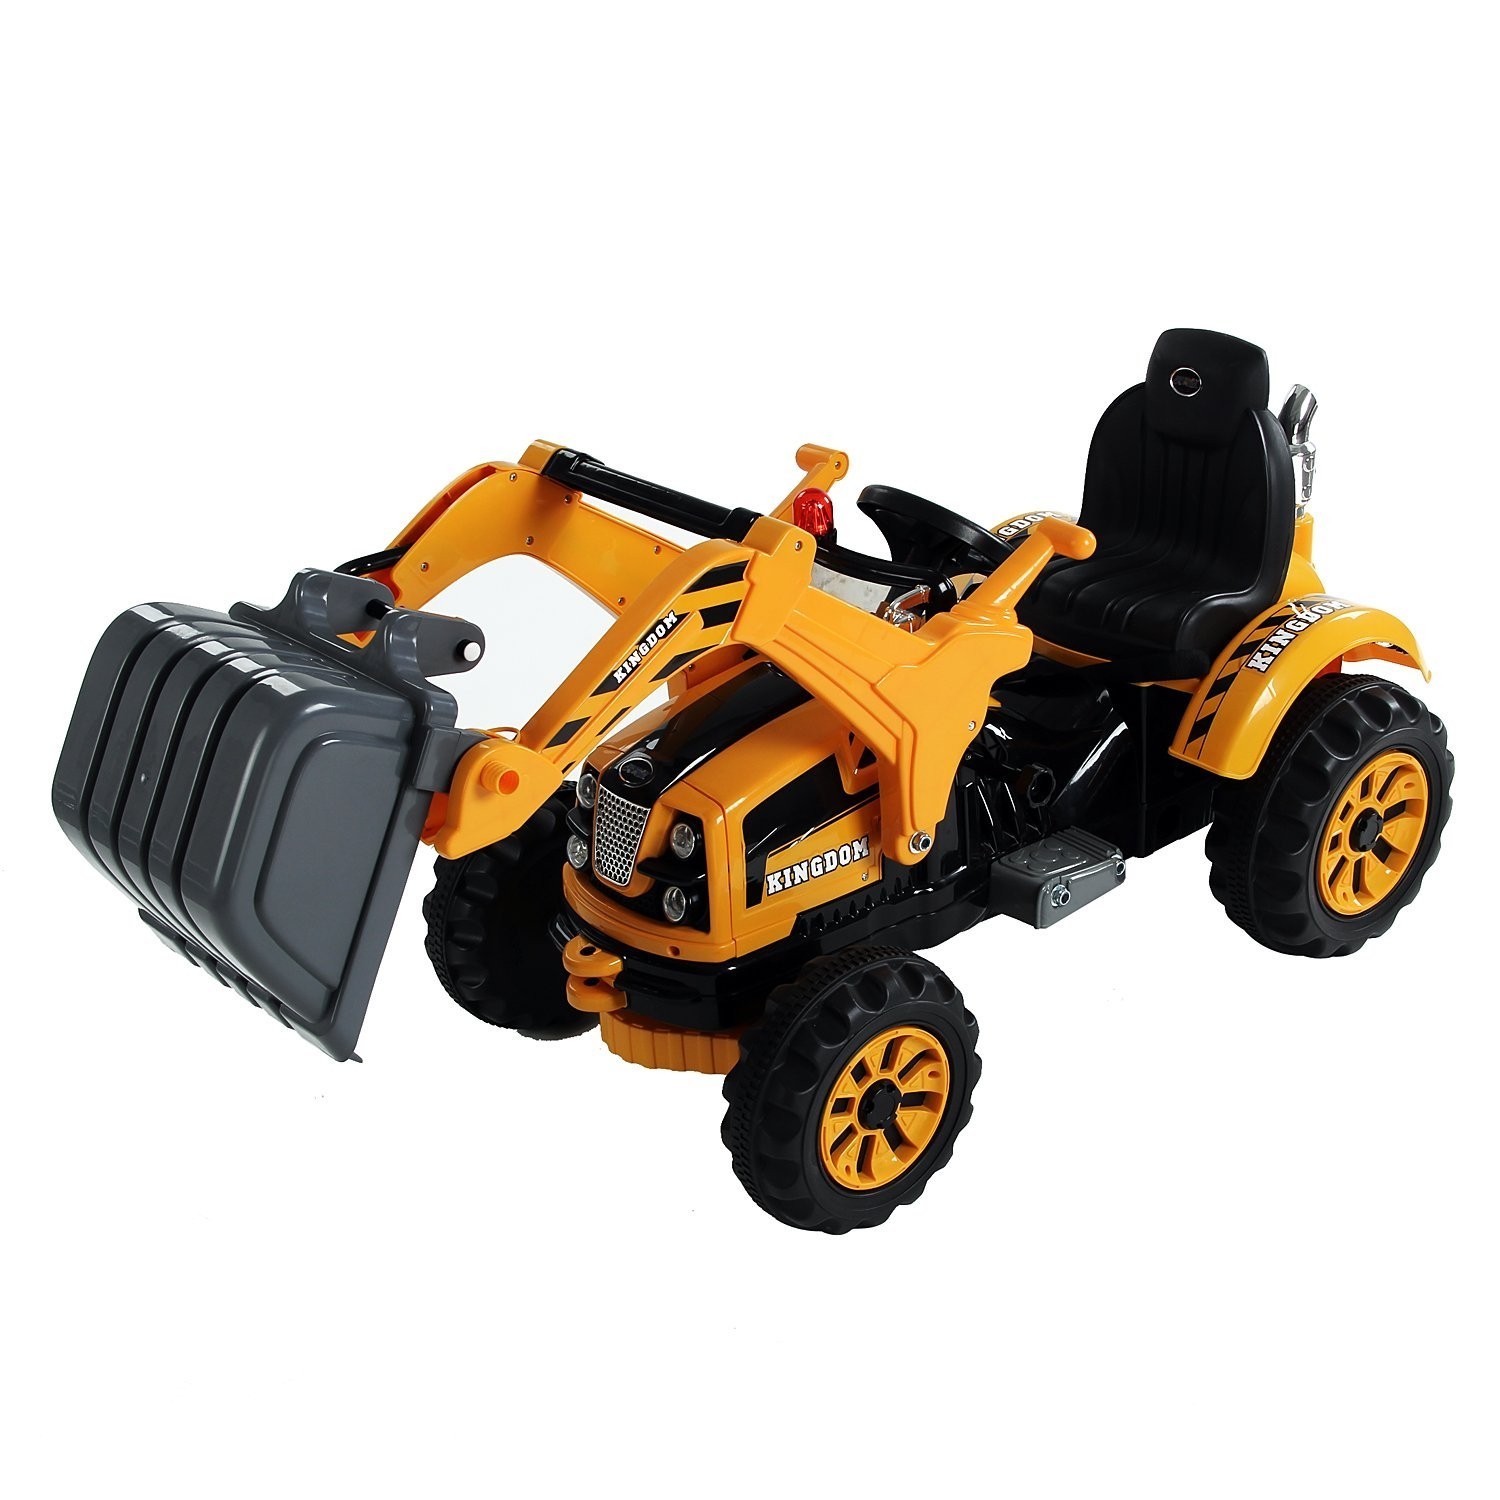 Construction Excavator Vehicle Ride On Toy